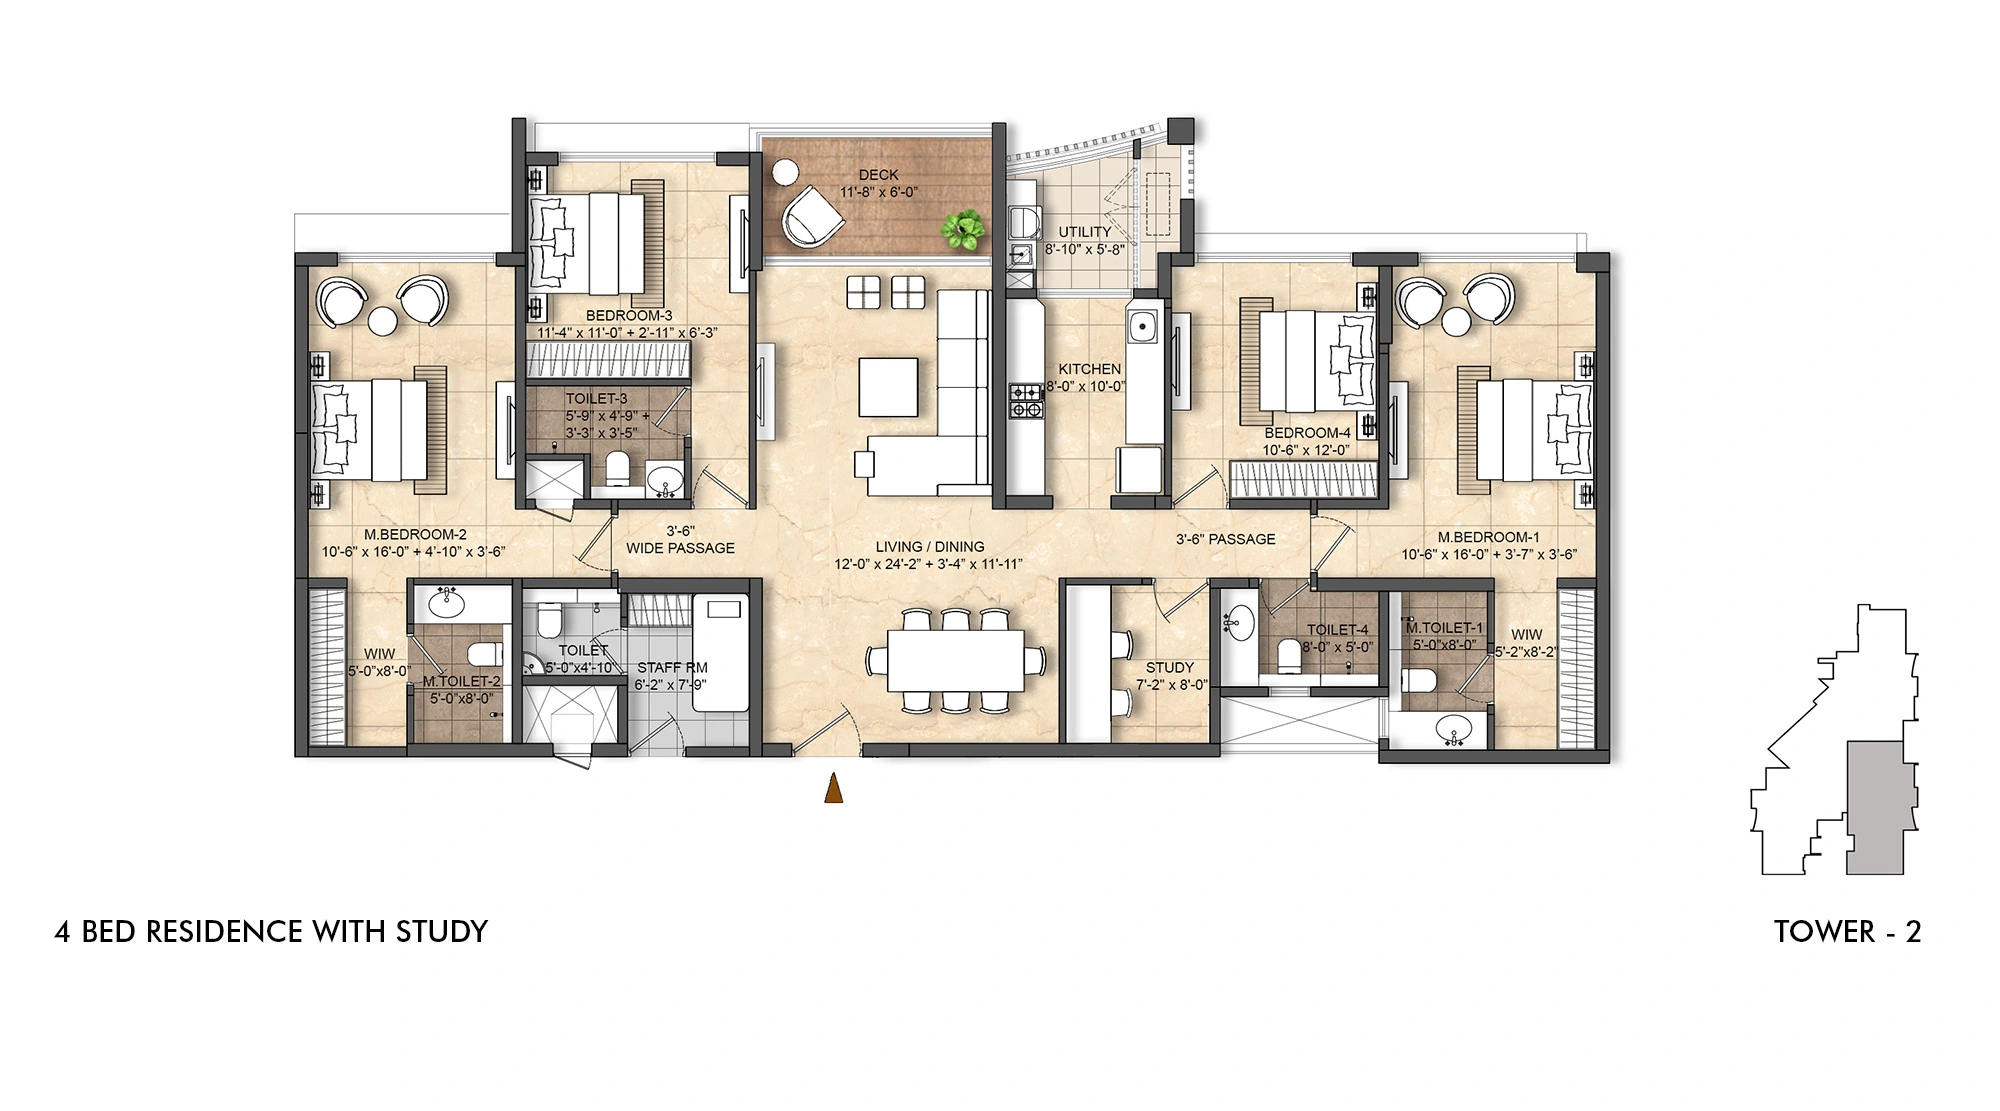 Lodha Divino 4 BHK Floor Plan with Study Room